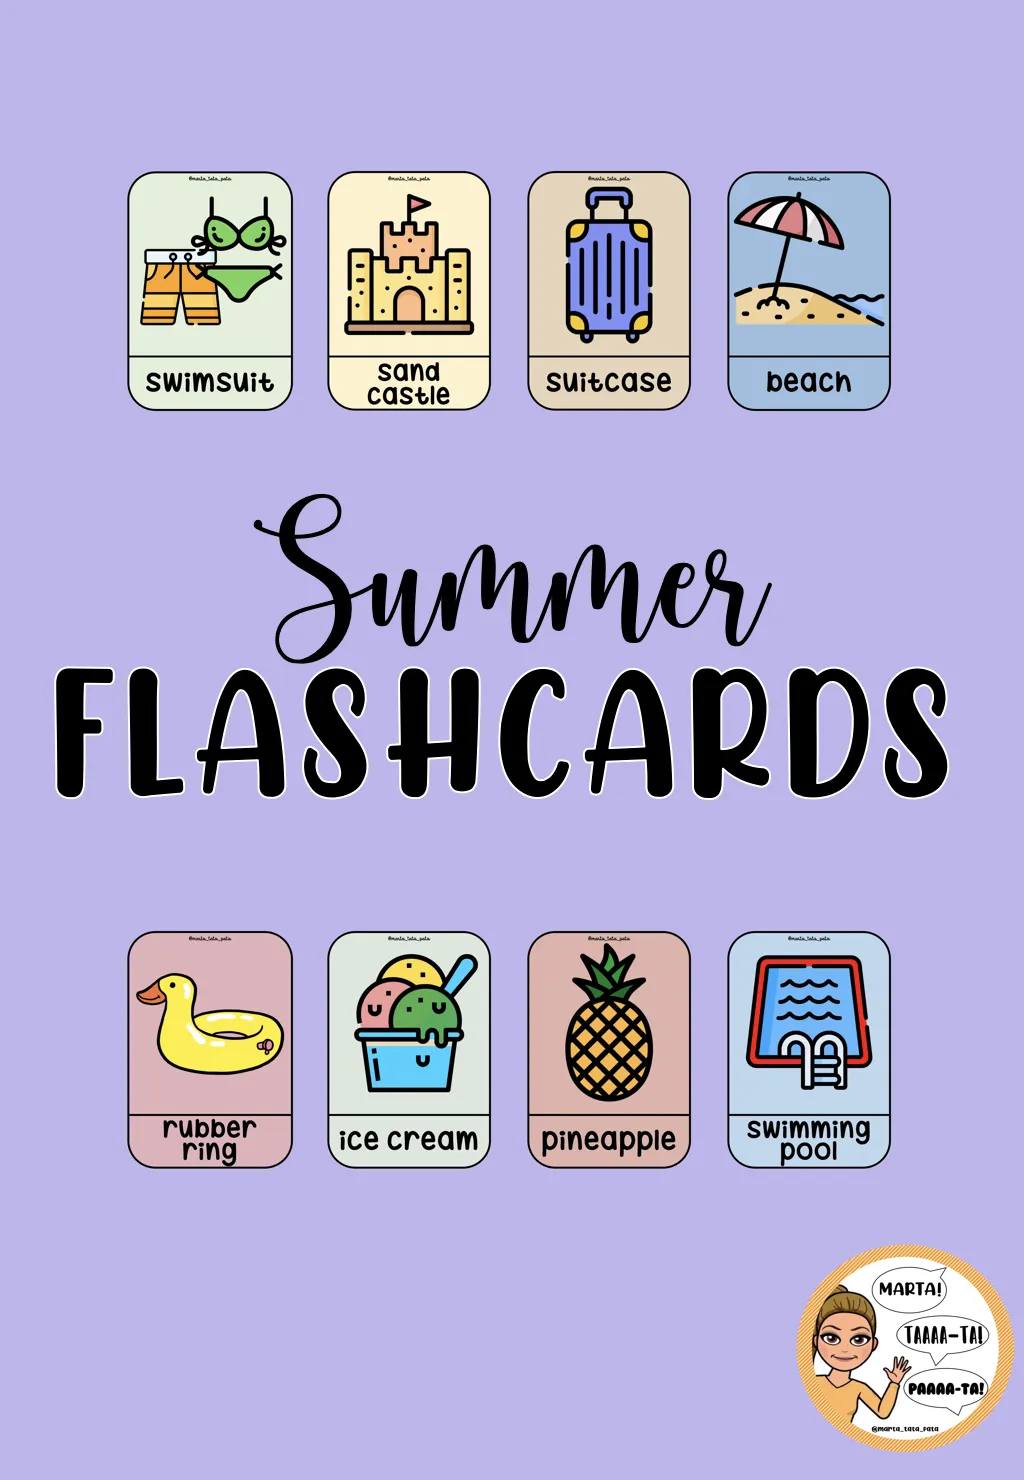 Summer flashcards